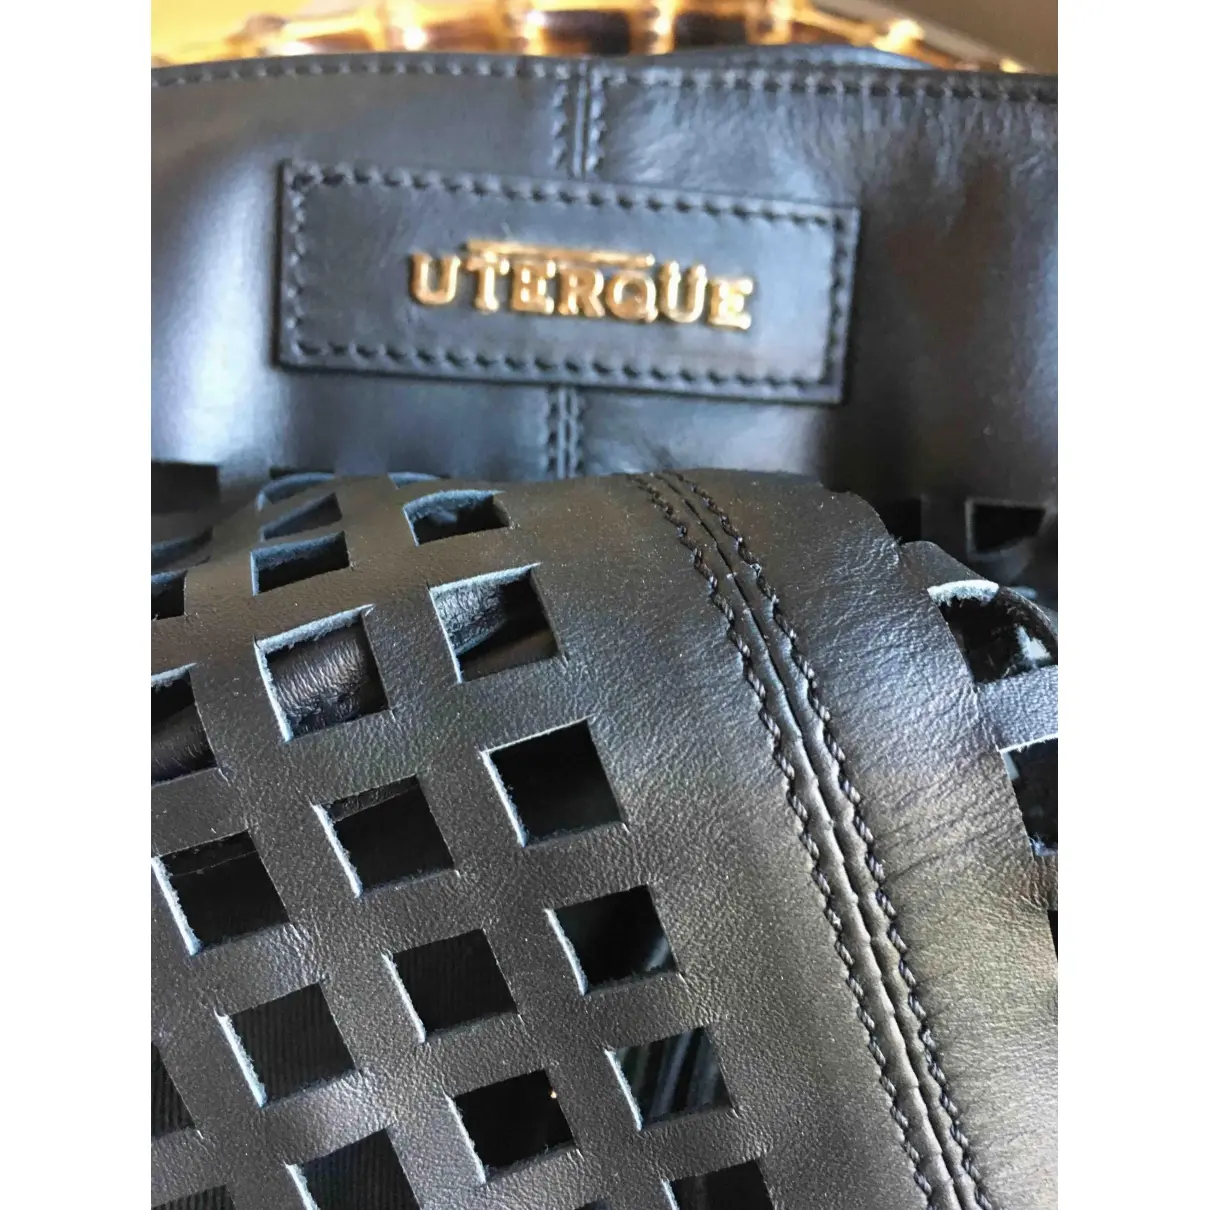 Buy Uterque Leather handbag online